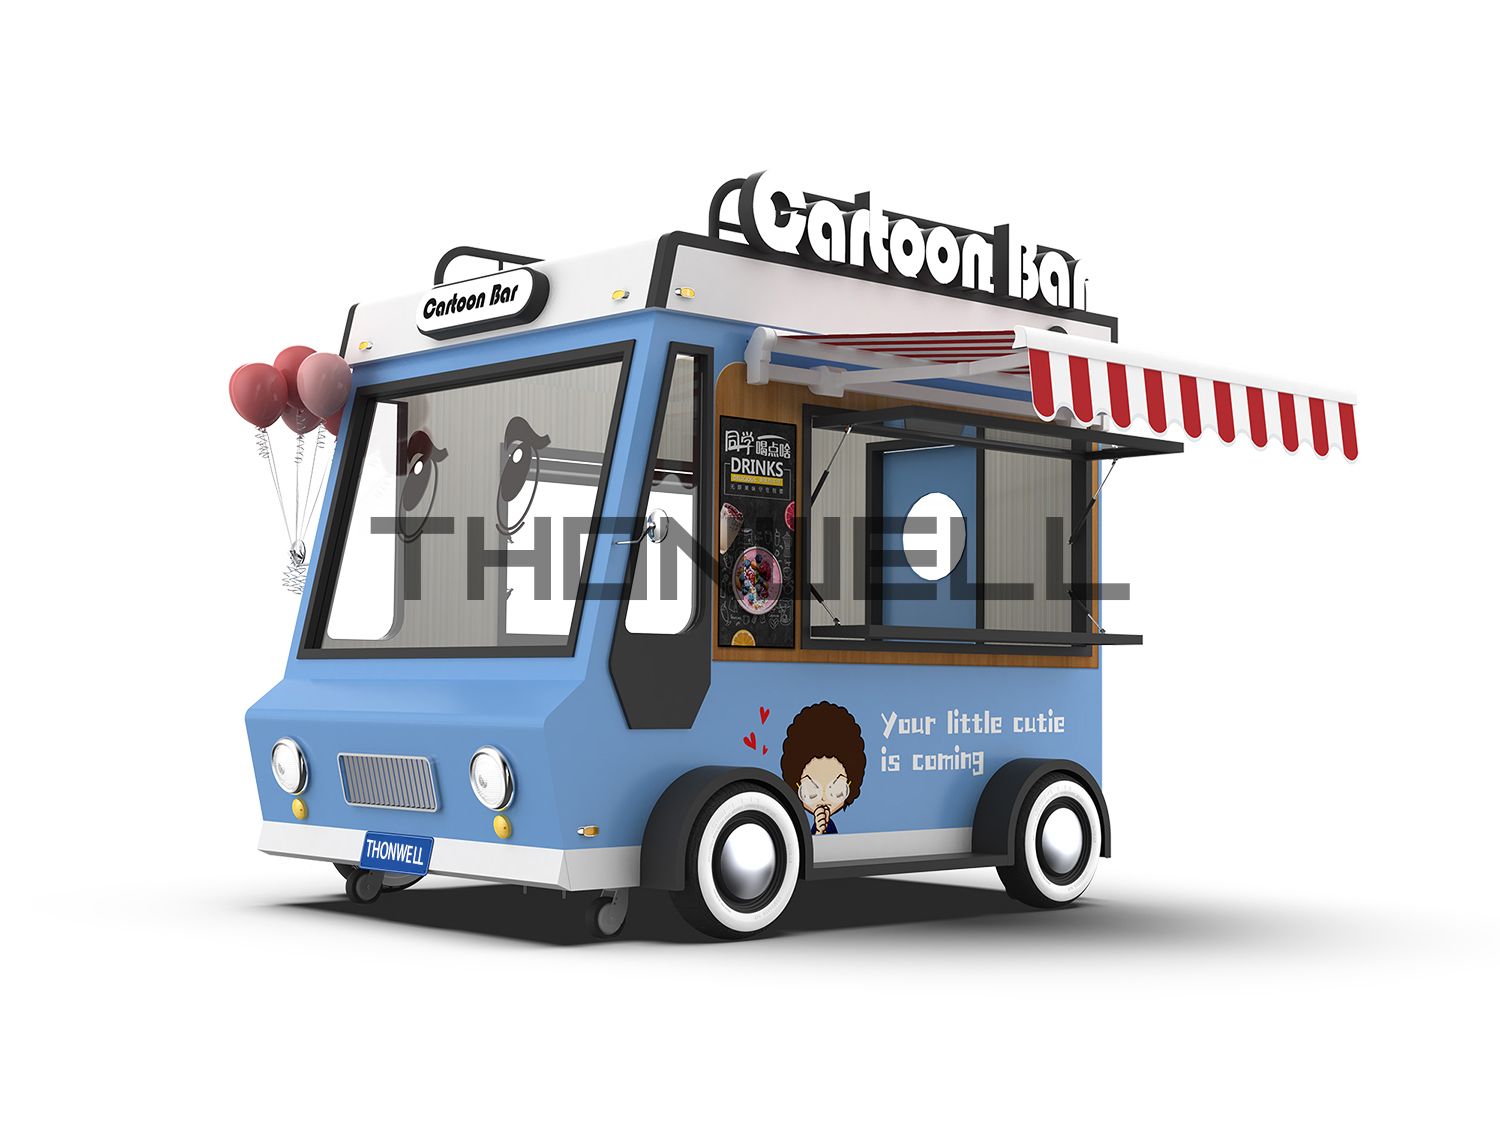 Food truck ice cream cart of Billy